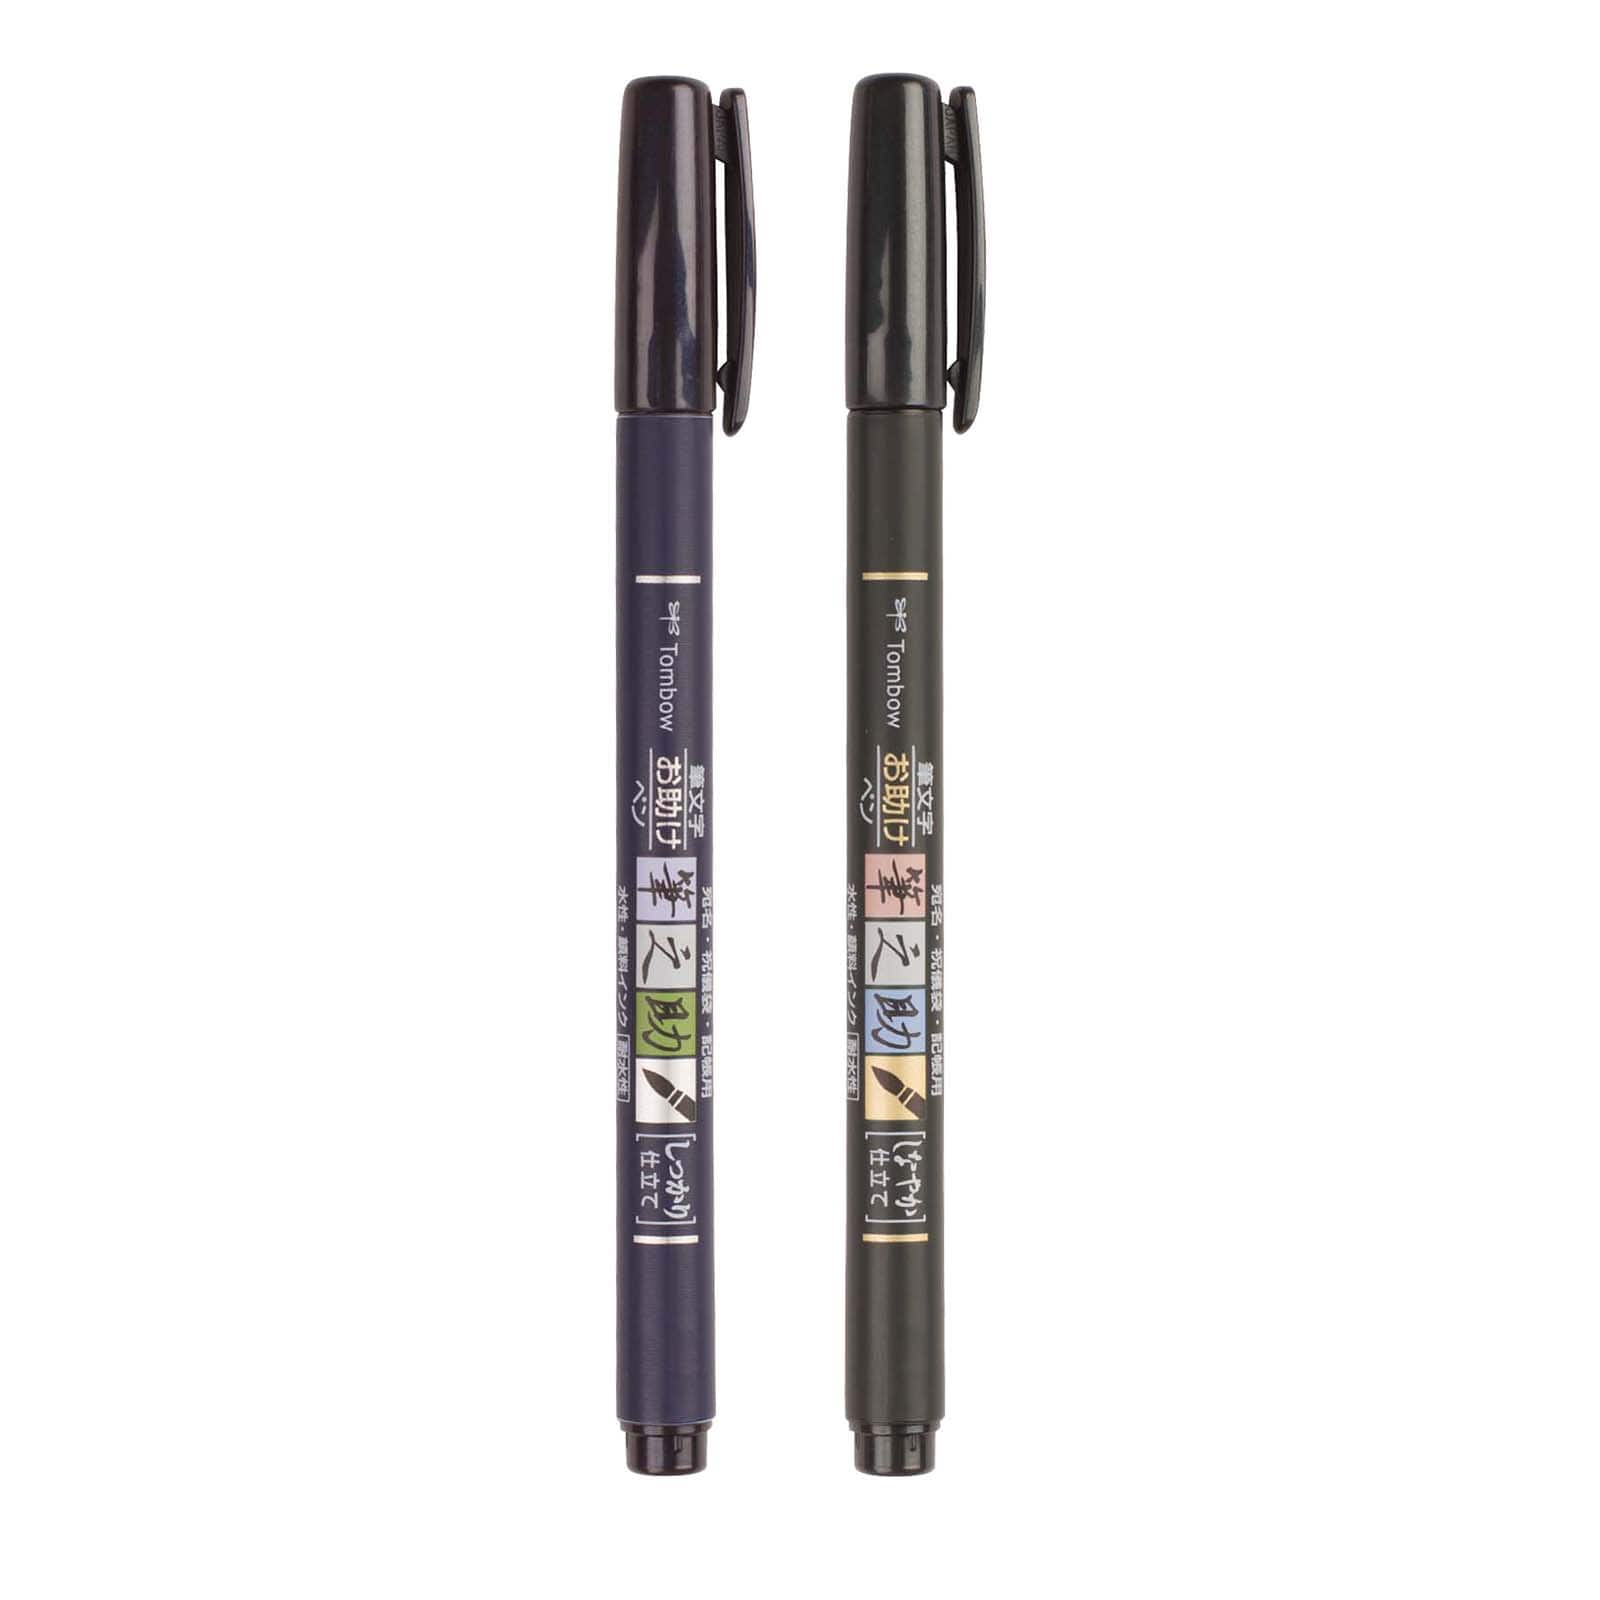 Tombow Fudenosuke Calligraphy Brush Pen - Hard/Soft Tip